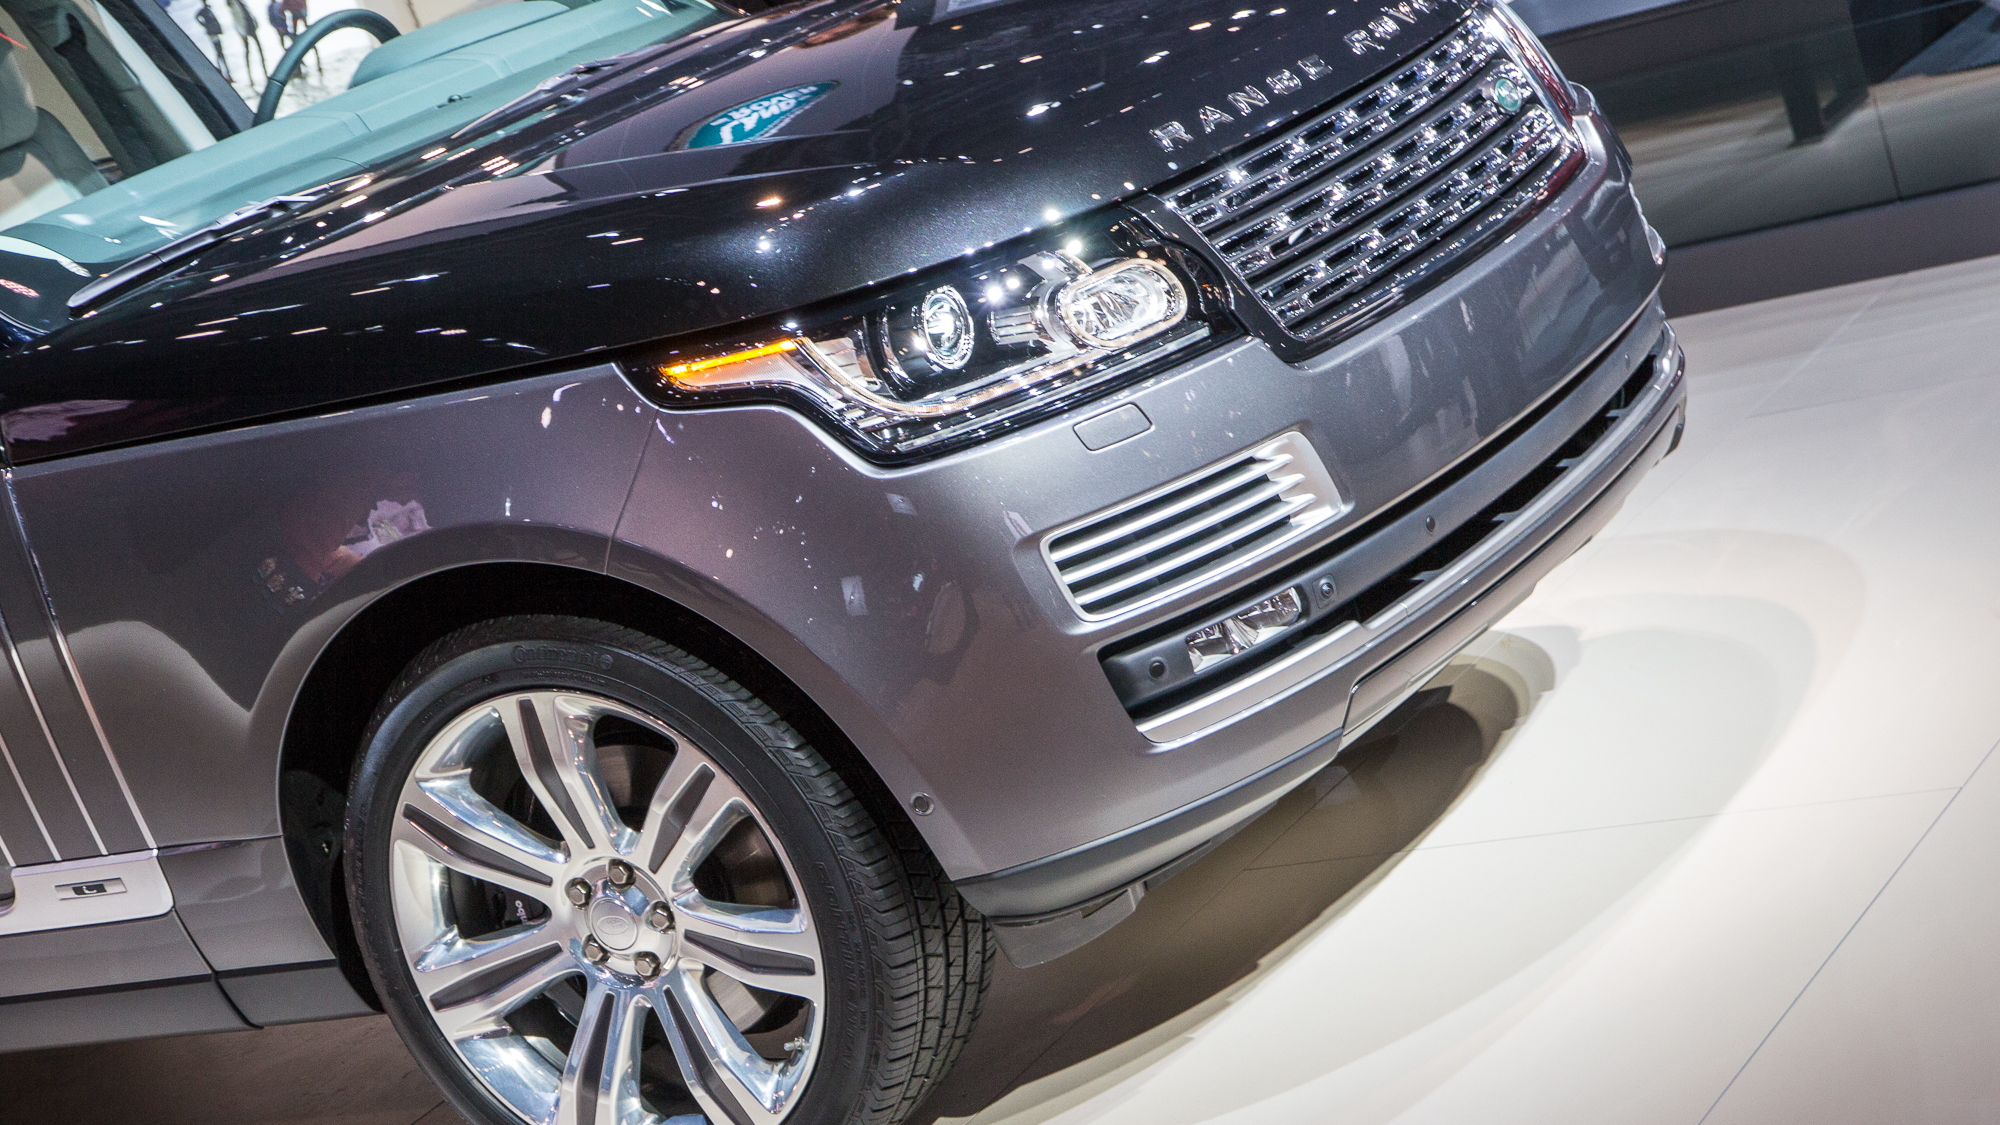 Range Rover SVAutobiography, 2015 New York Auto Show